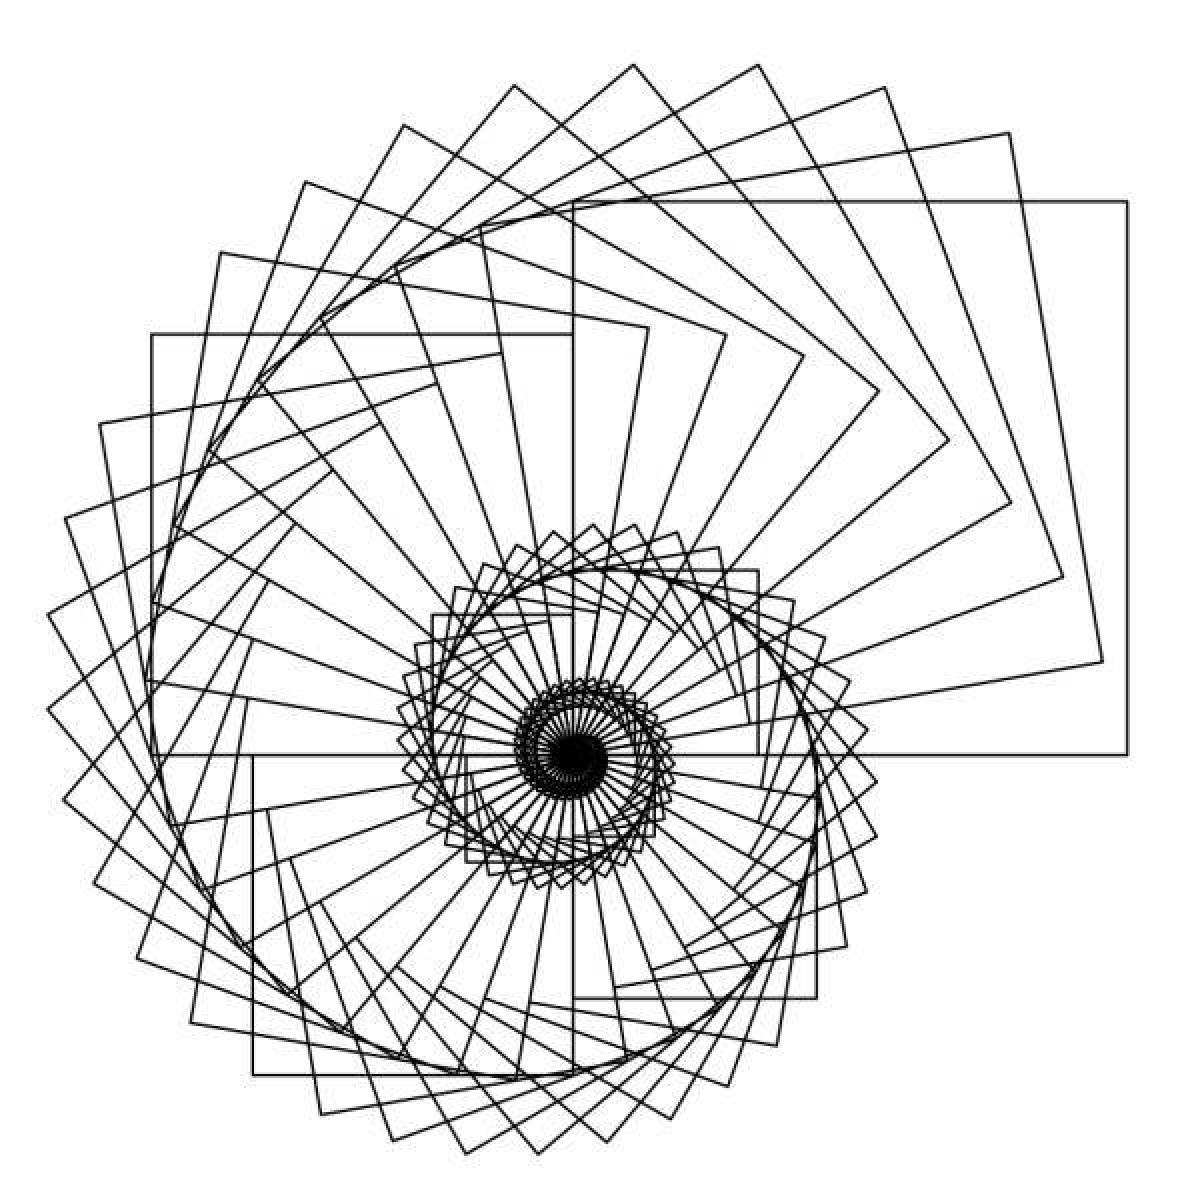 Adorable circular spiral coloring page